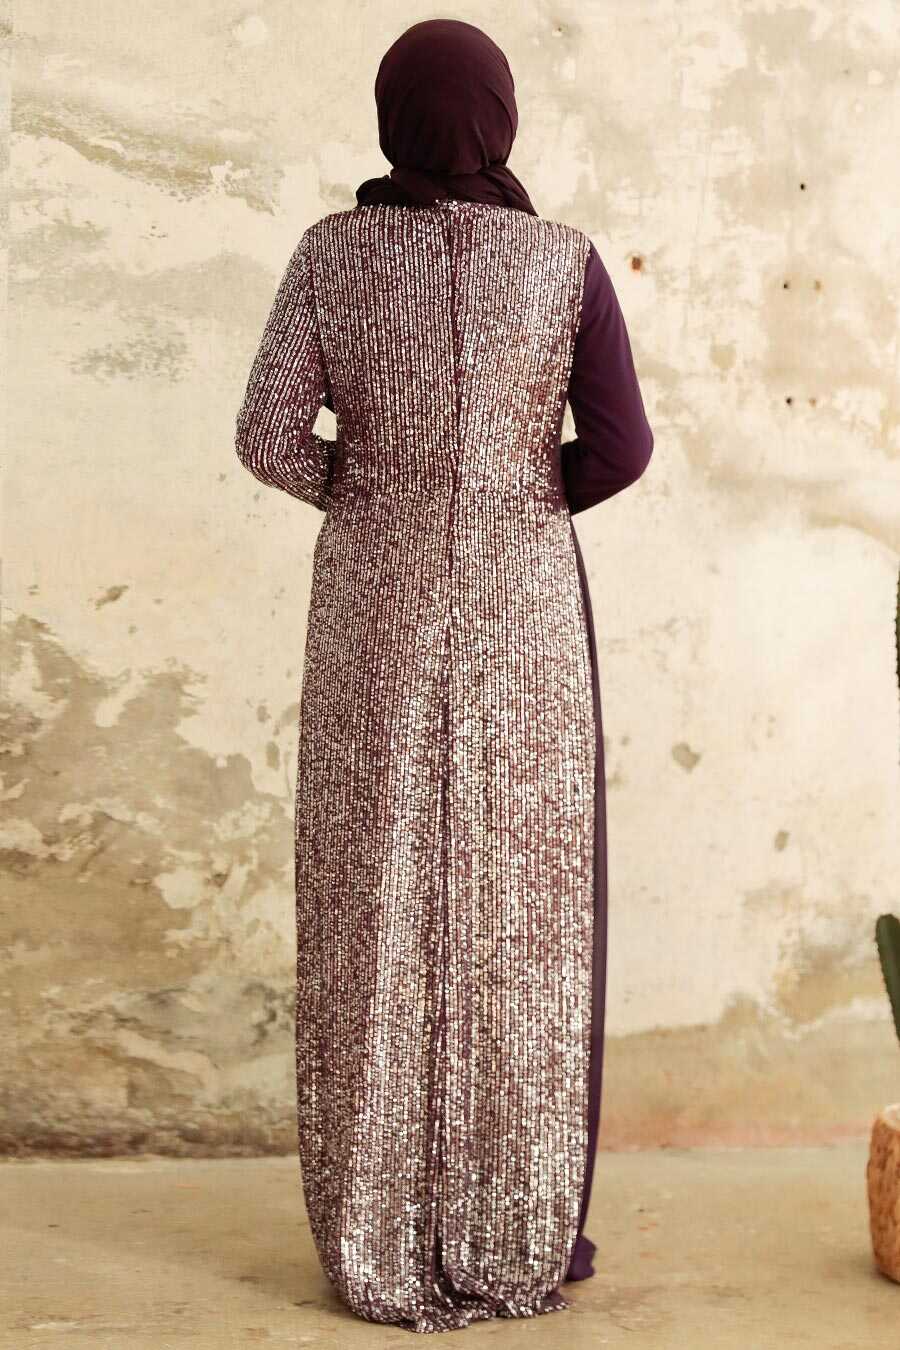 Neva Style - Long Sleeve Purple Islamic Prom Dress 25851MOR